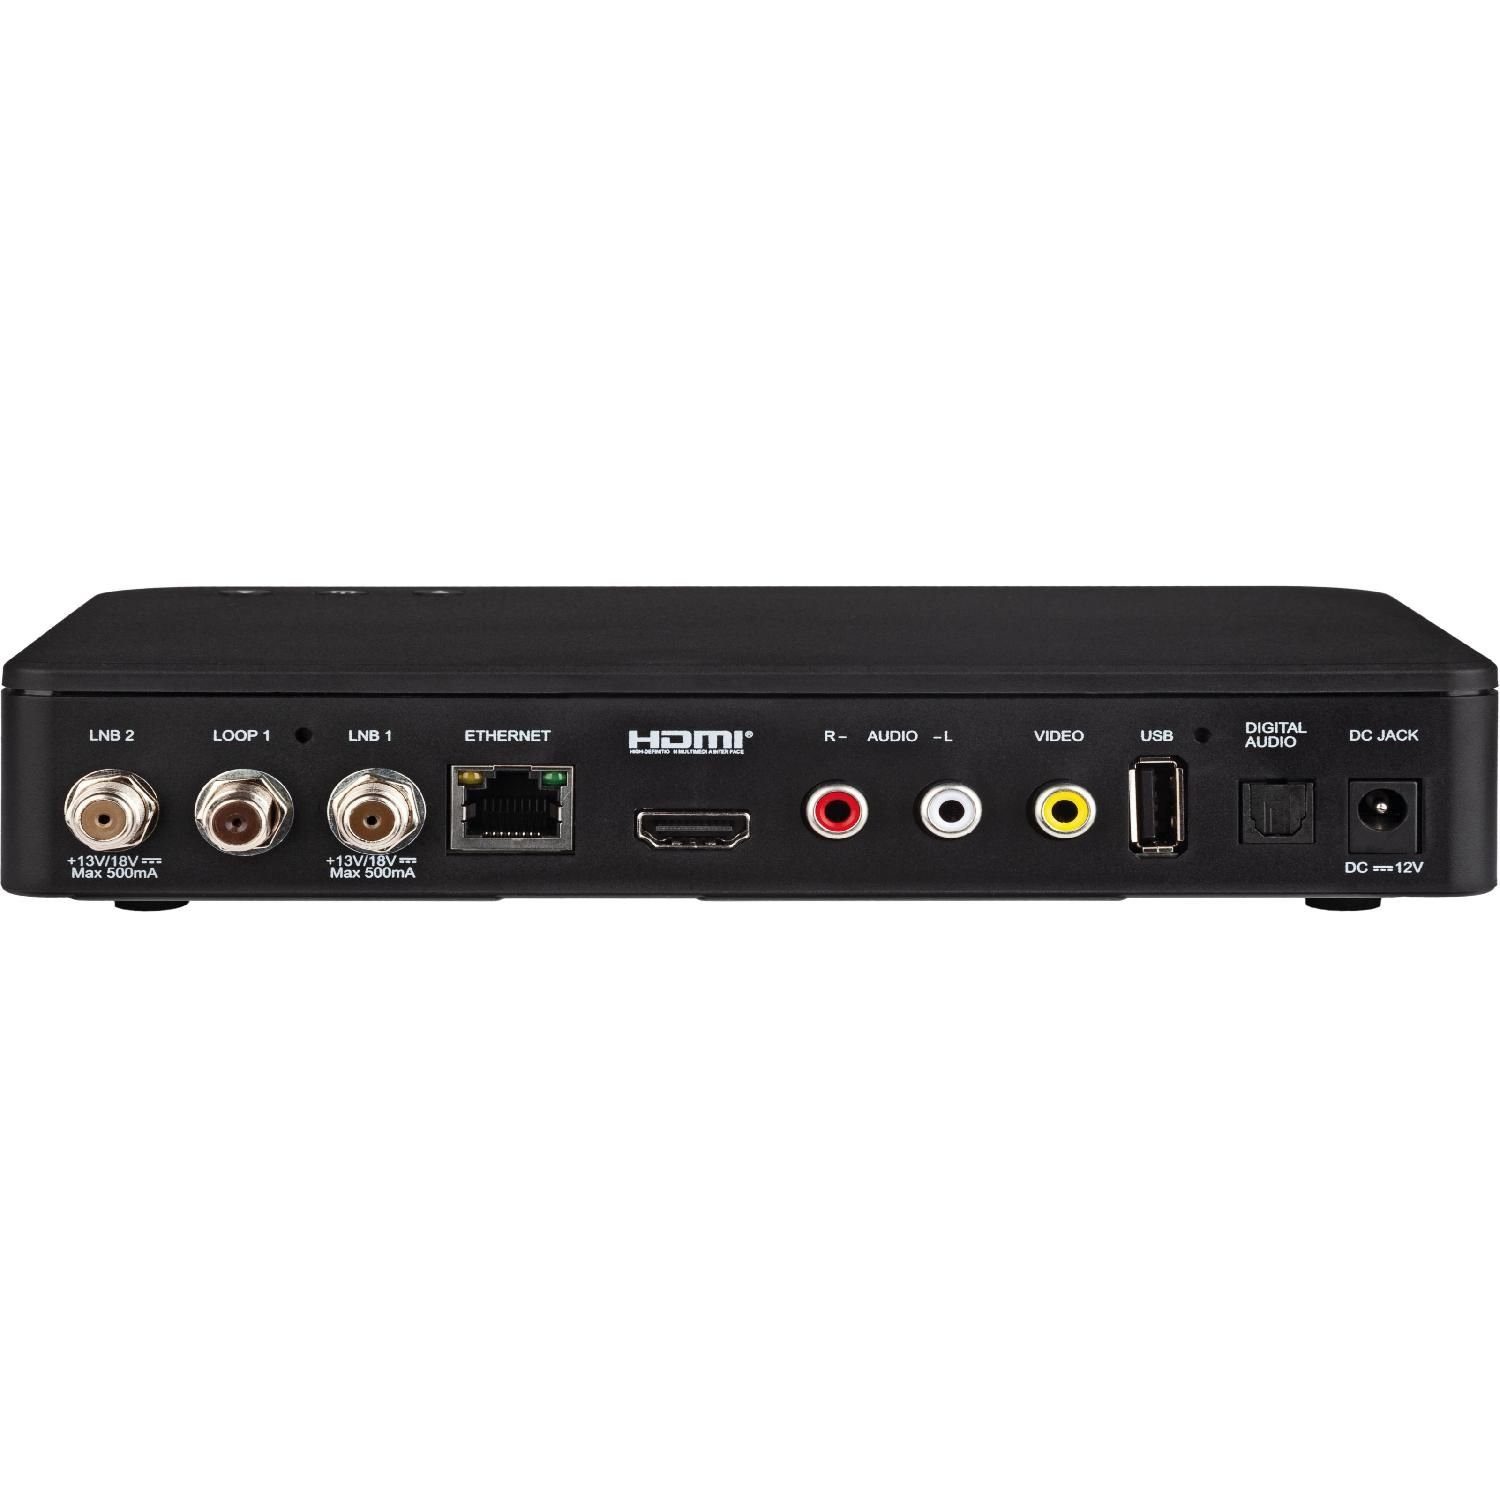 TELESTAR TELETWIN HD FULL RJ45 Twin-Satreceiver Bluetooth to HD Sende-Funktion) u. mit A2DP Satellitenreceiver Bluetooth, USB PVR Netzwerkbuchse, Sat (LAN (Ethernet), IP